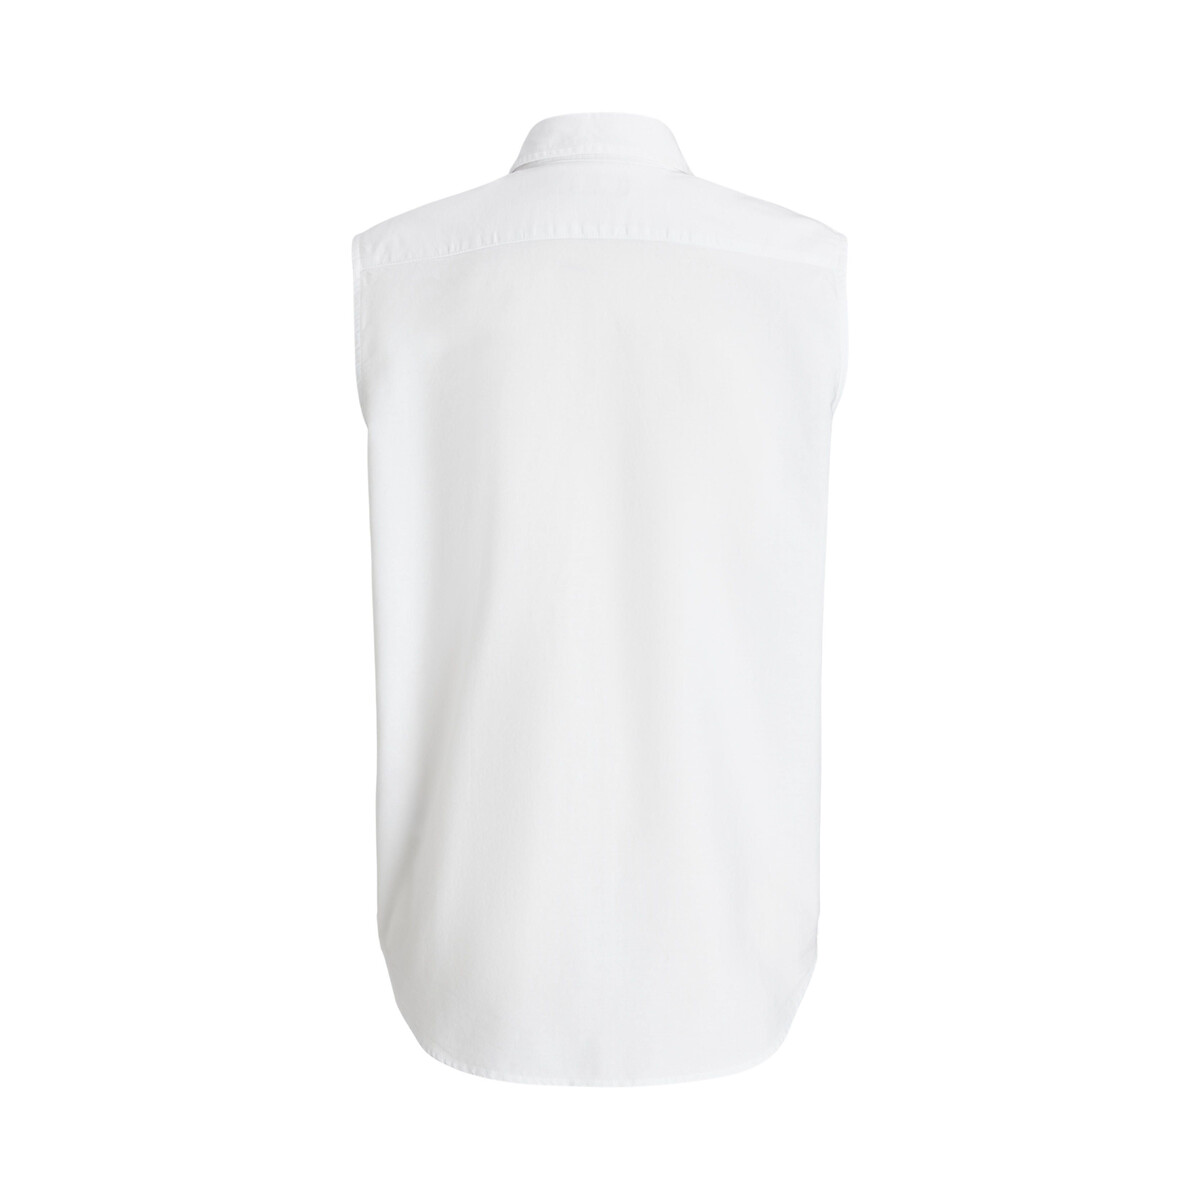 Рубашка без рукавов  L белый LaRedoute, размер L - фото 2